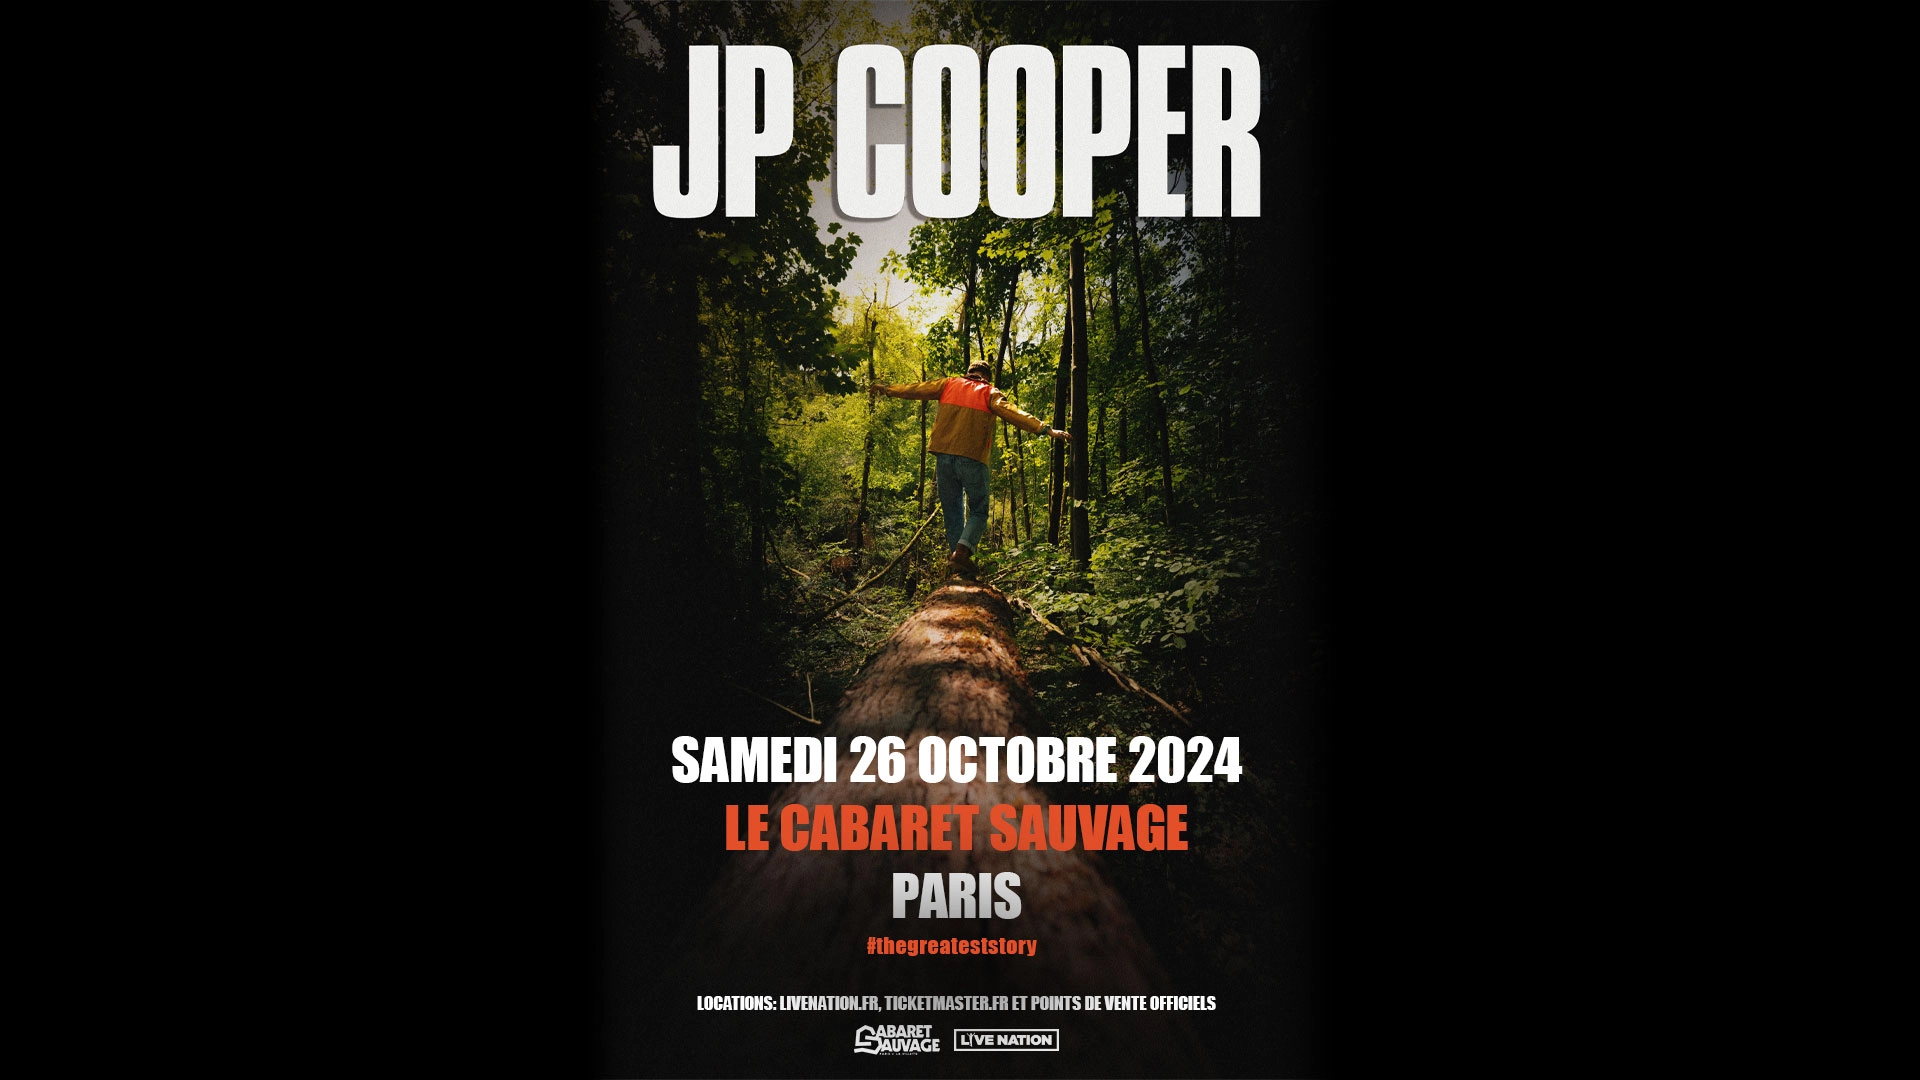 JP Cooper at Cabaret Sauvage Tickets